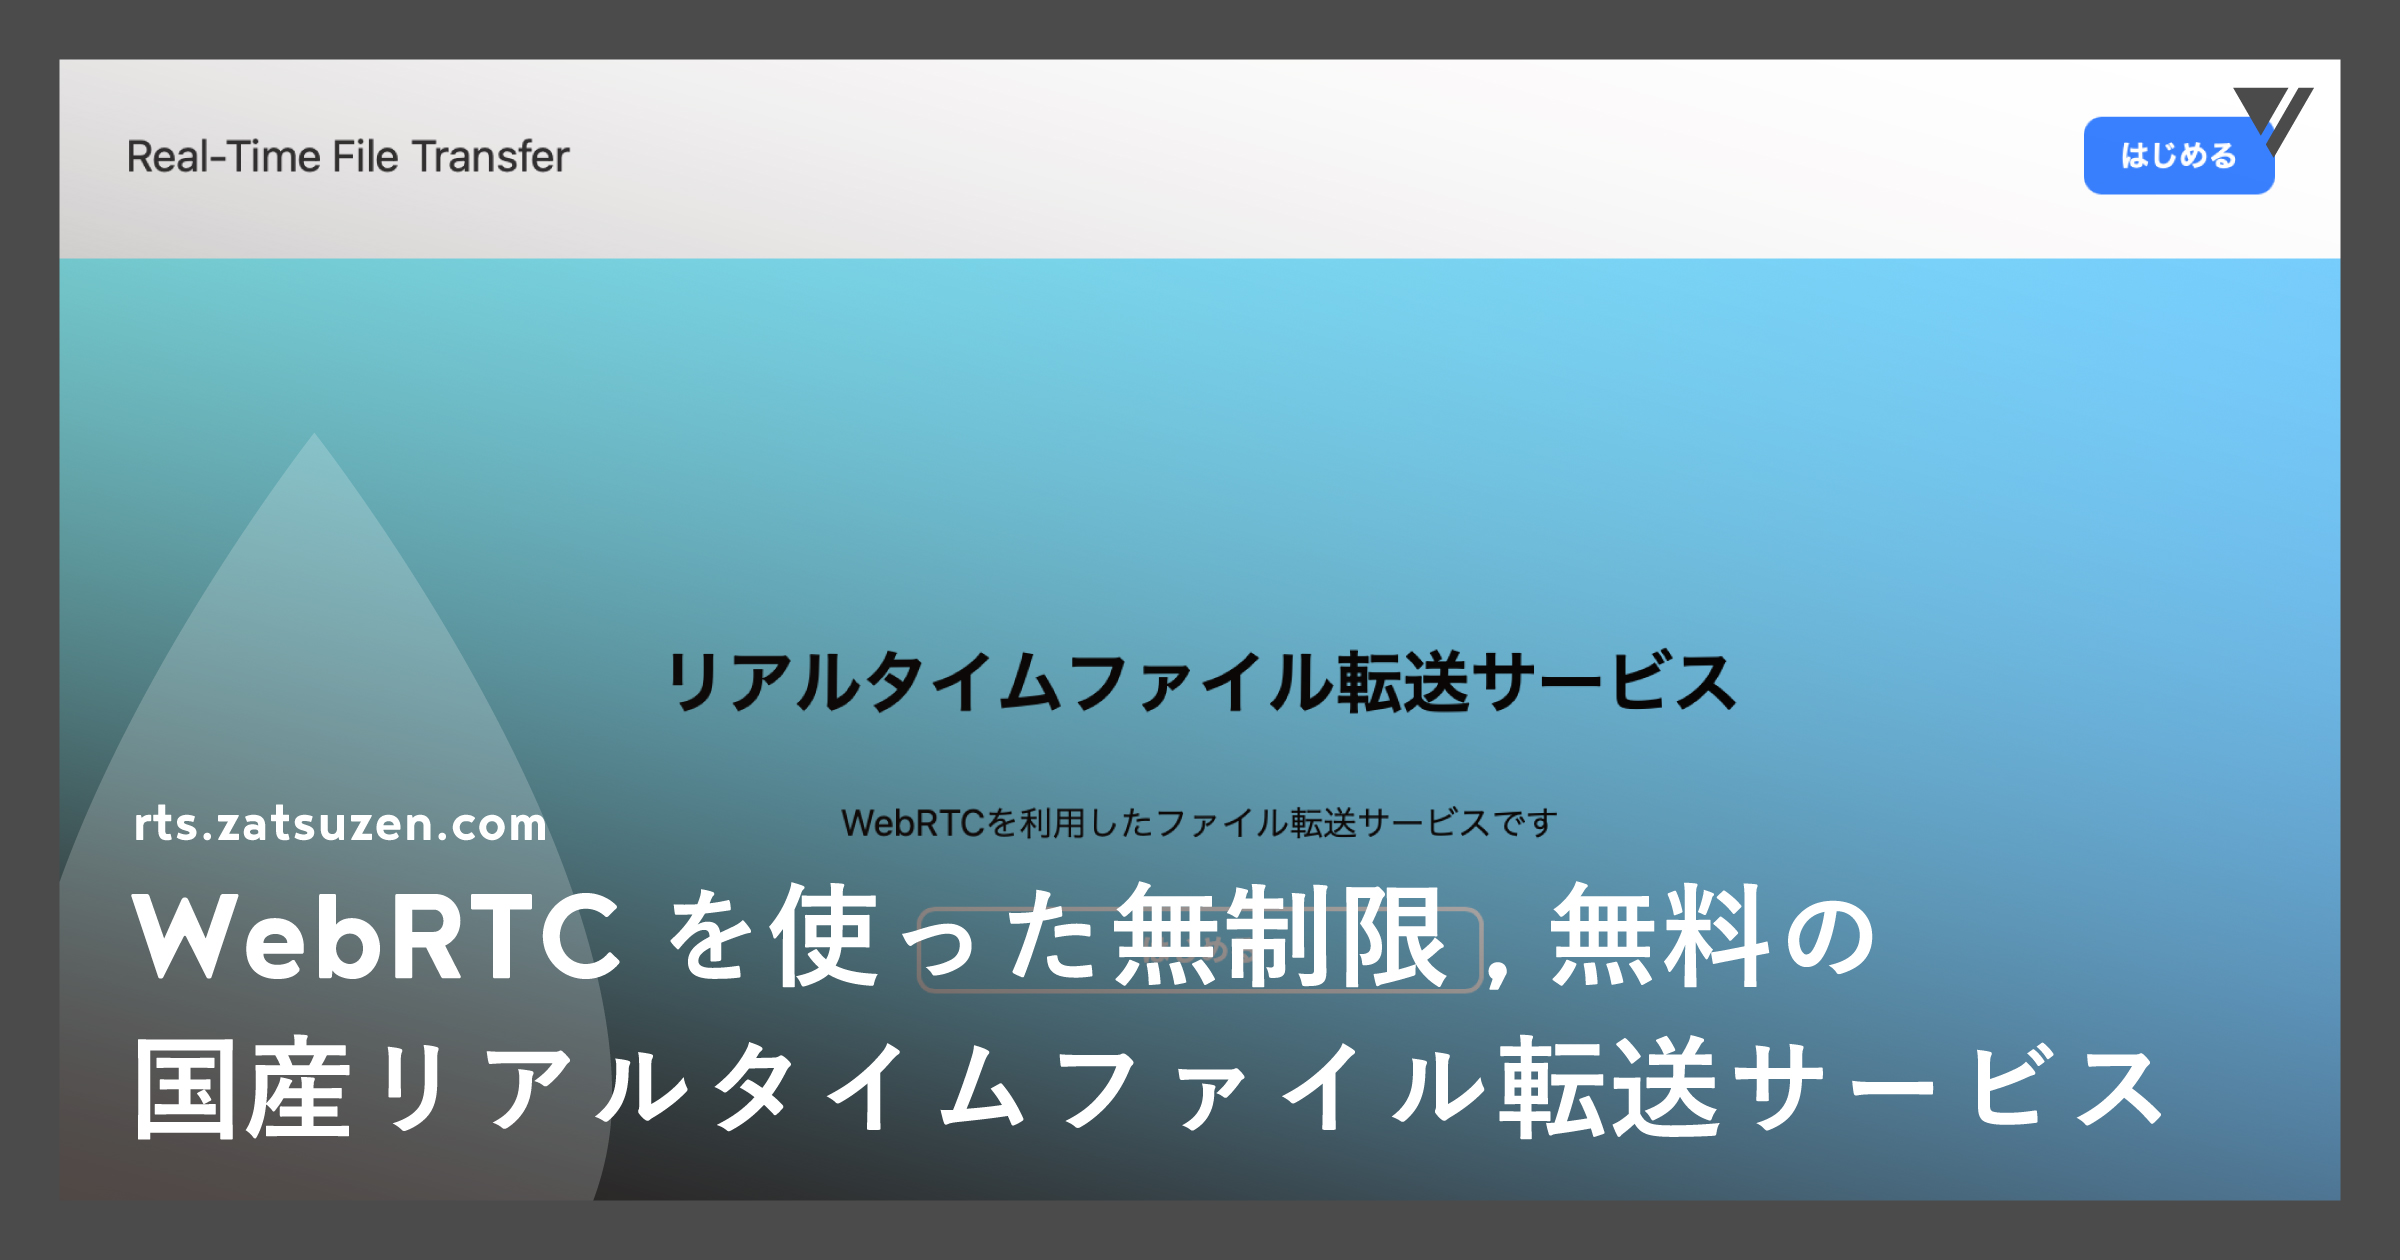 「WebRTCを使ったP2Pの容量無制限,無料の国産リアルタイムファイル転送サービス、rts.zatsuzen.com」のアイキャッチ画像